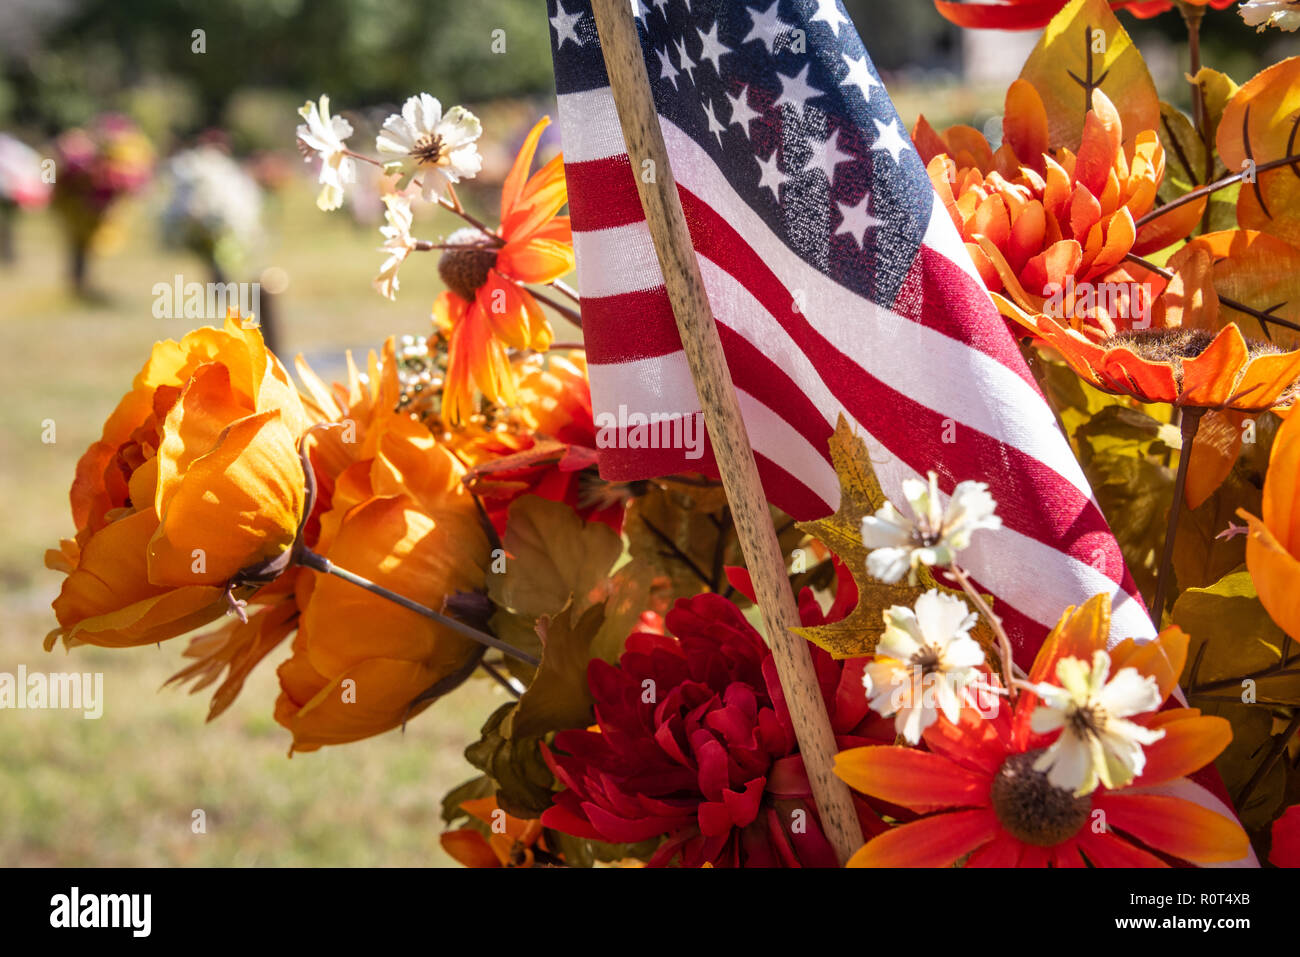 American flag amidst cemetery gravesite flowers. Stock Photo